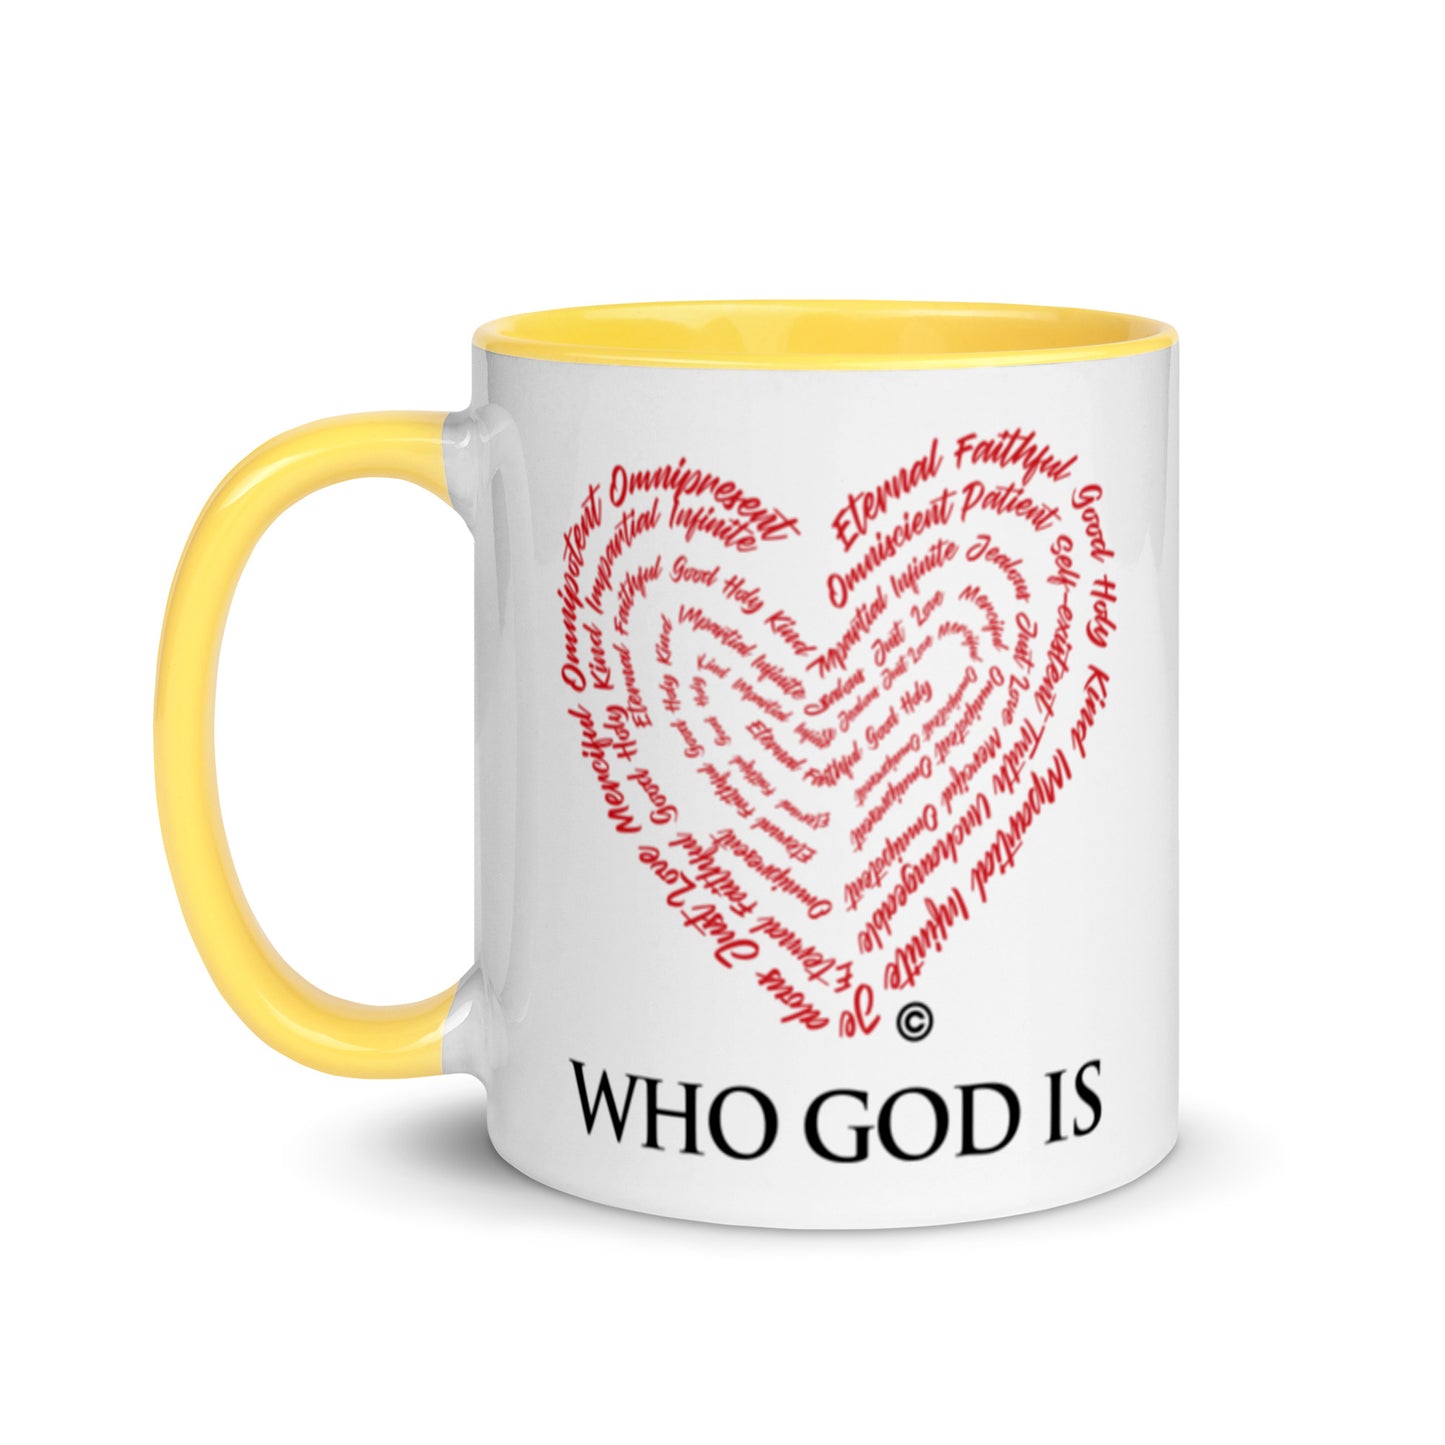 Who God Is Mug with Color Inside